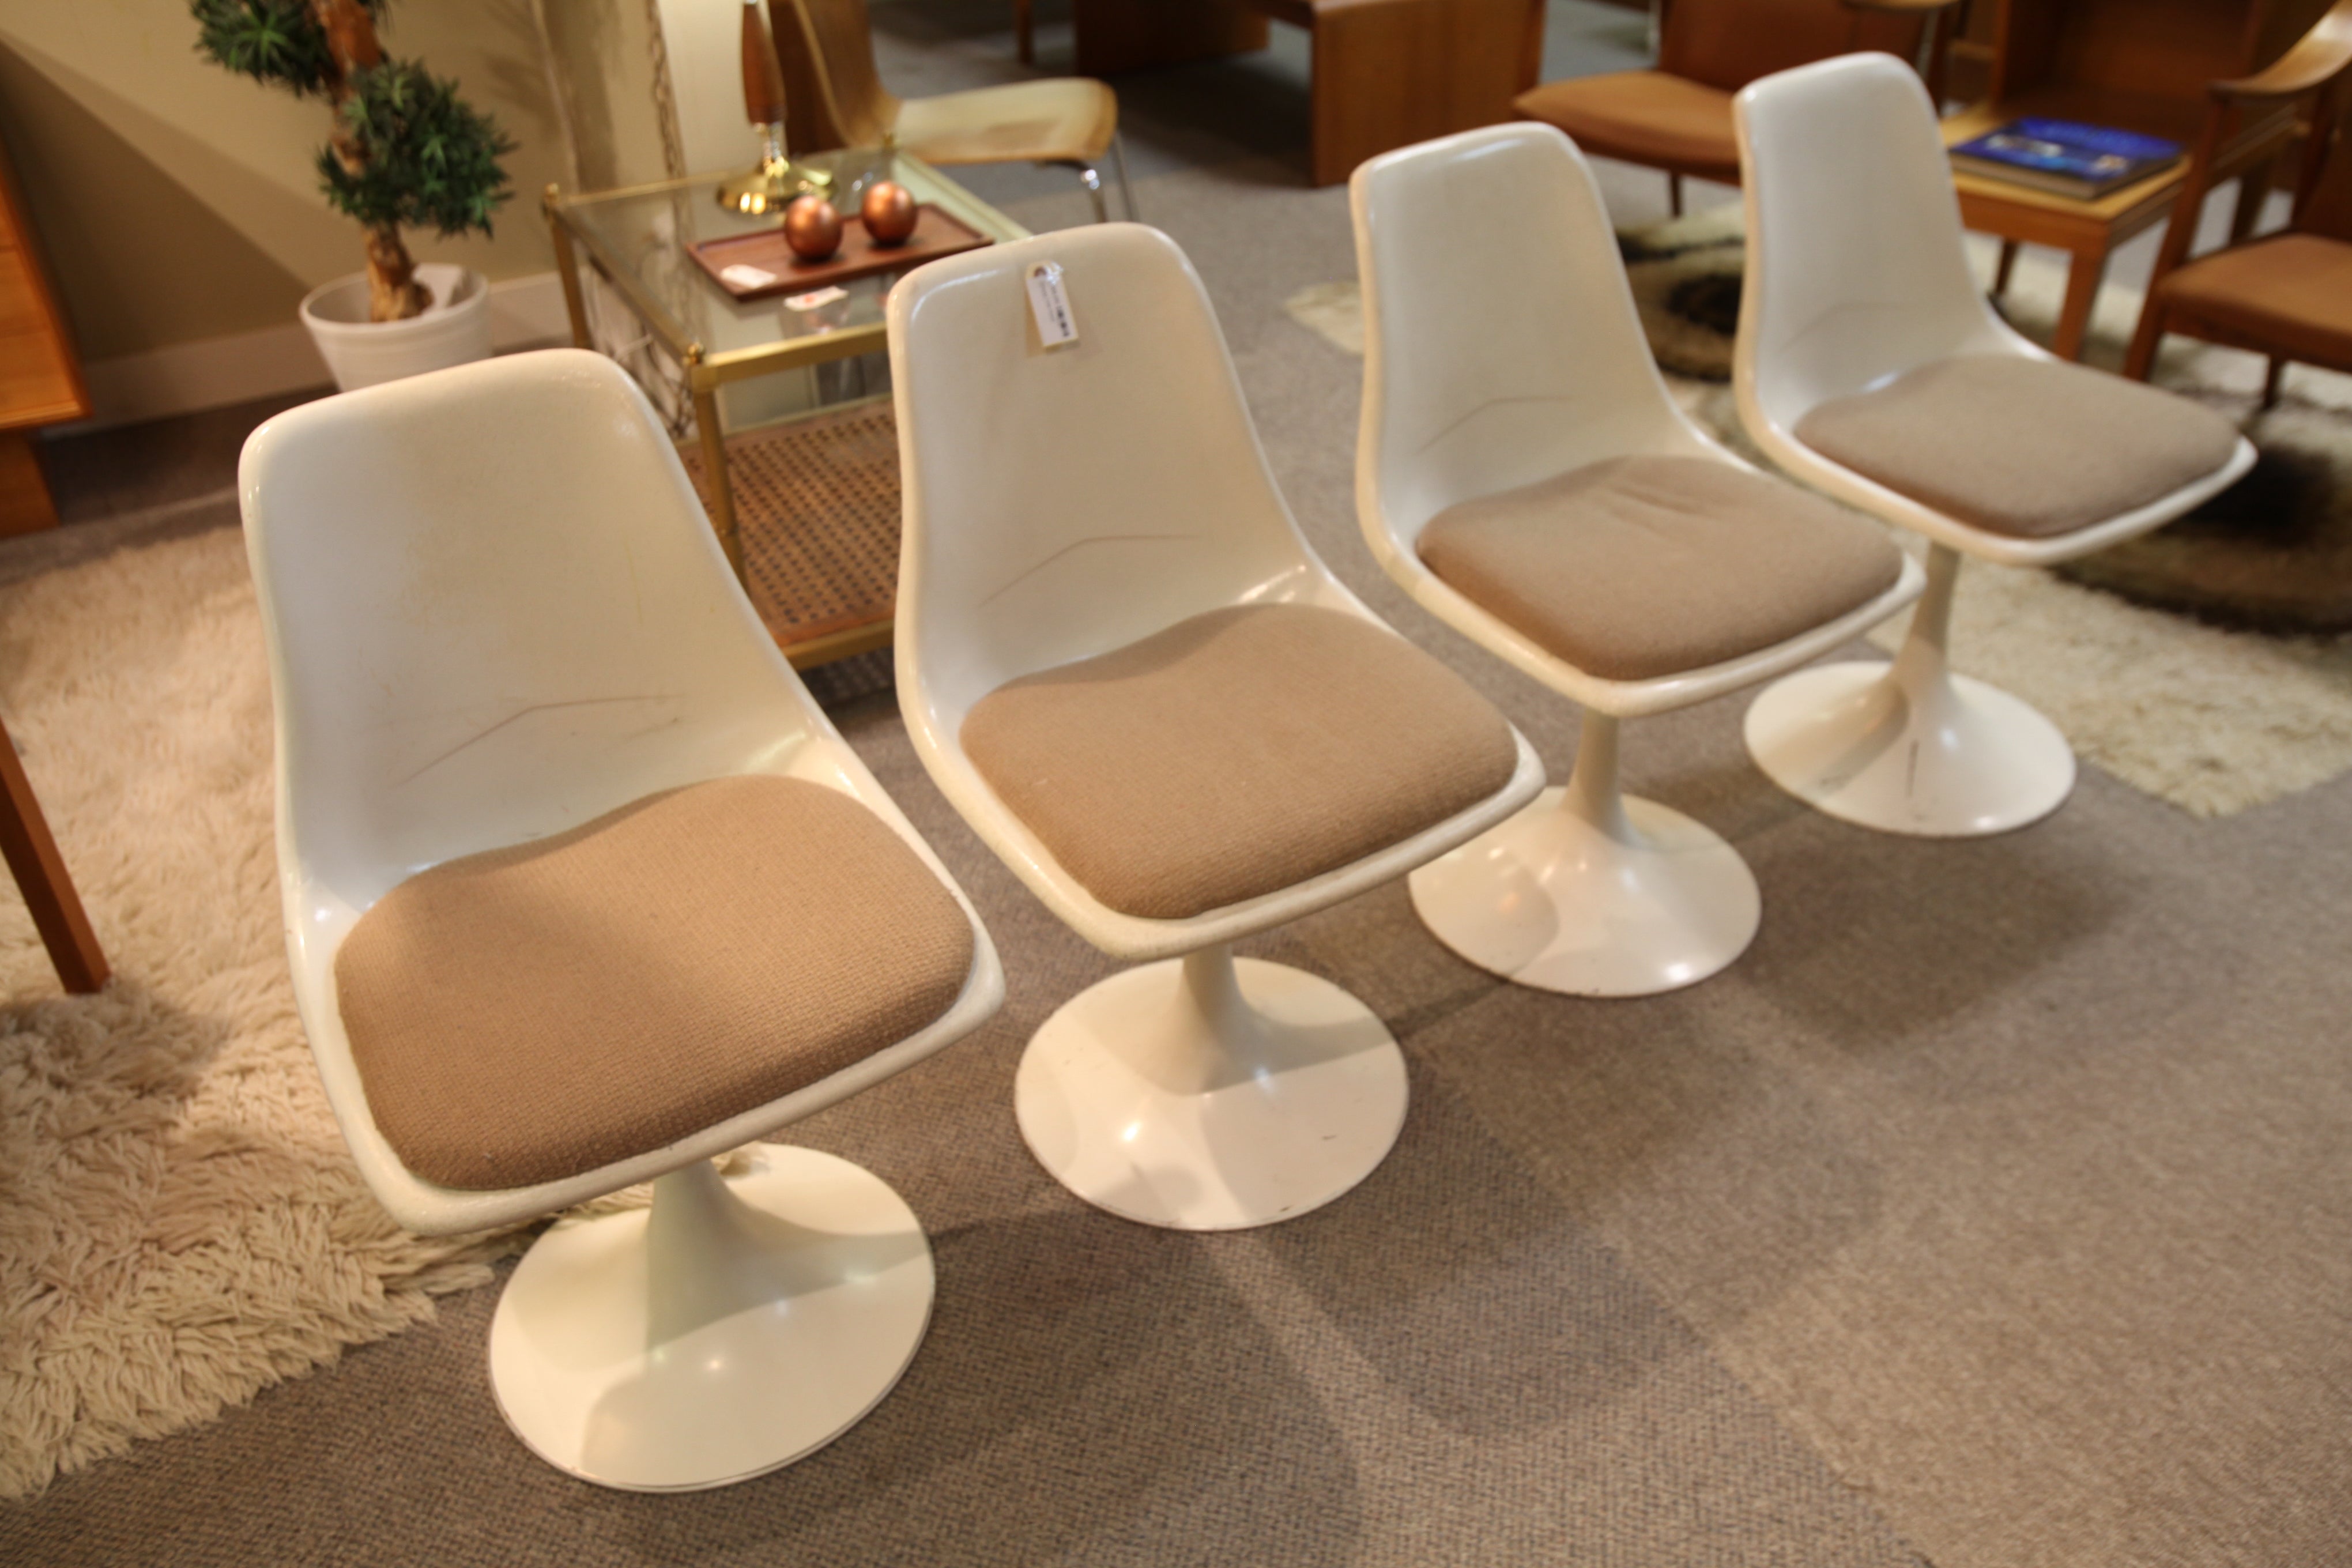 Set of 4 Vintage Fiberform Tulip Chairs (30"H x 18.5"W)